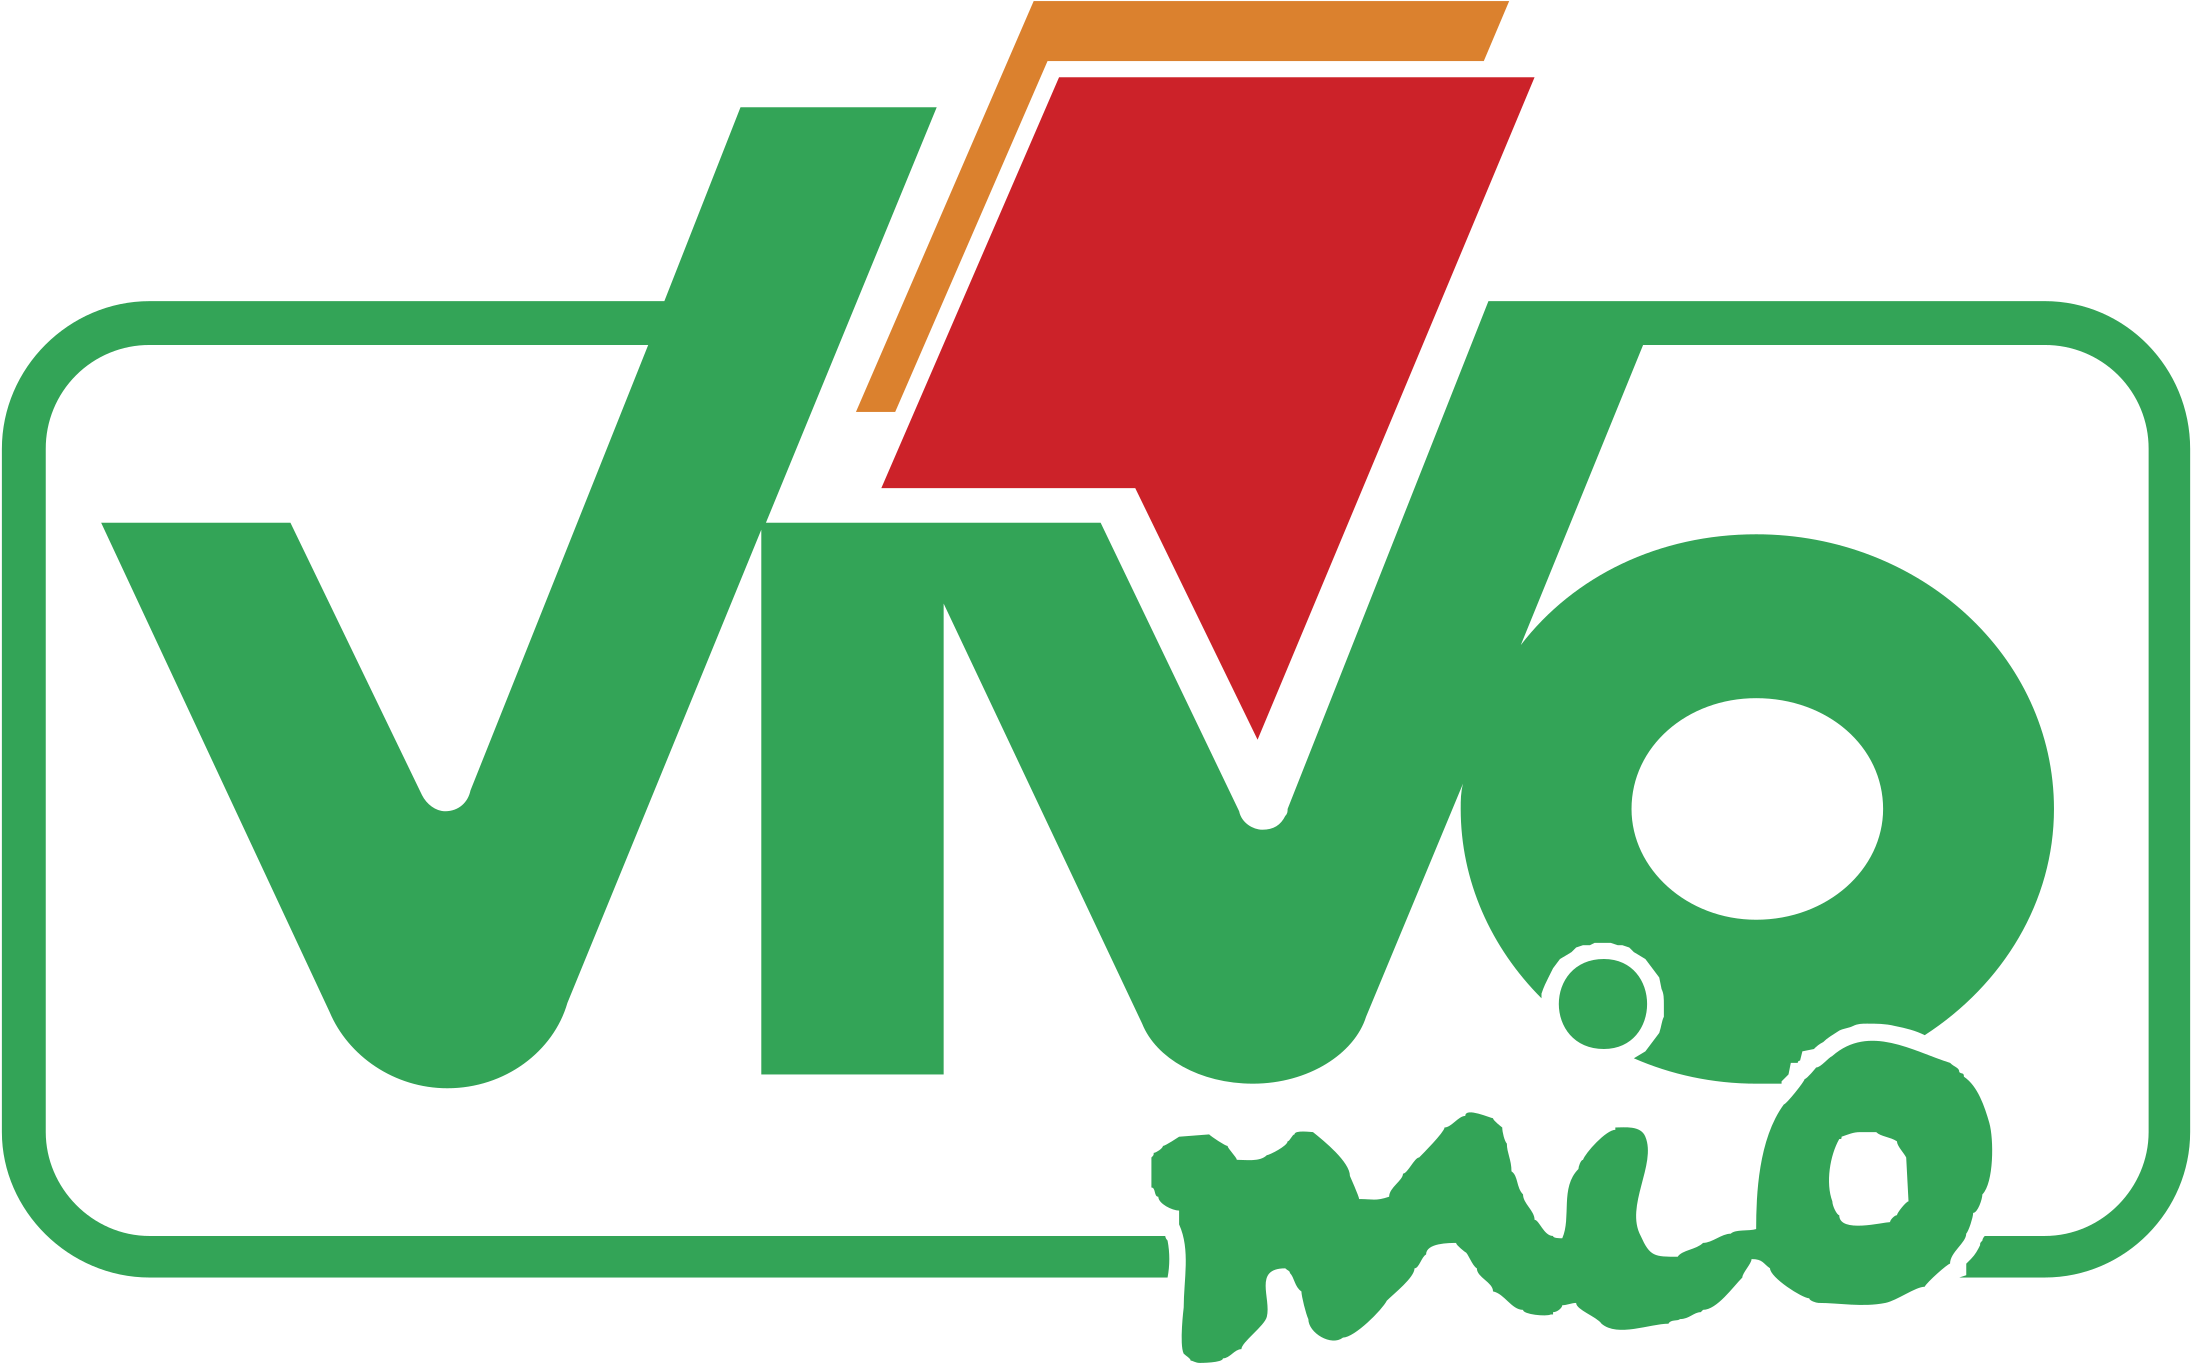 Vivo Mio Logo Png Transparent - Vivo Mio (2400x2400), Png Download